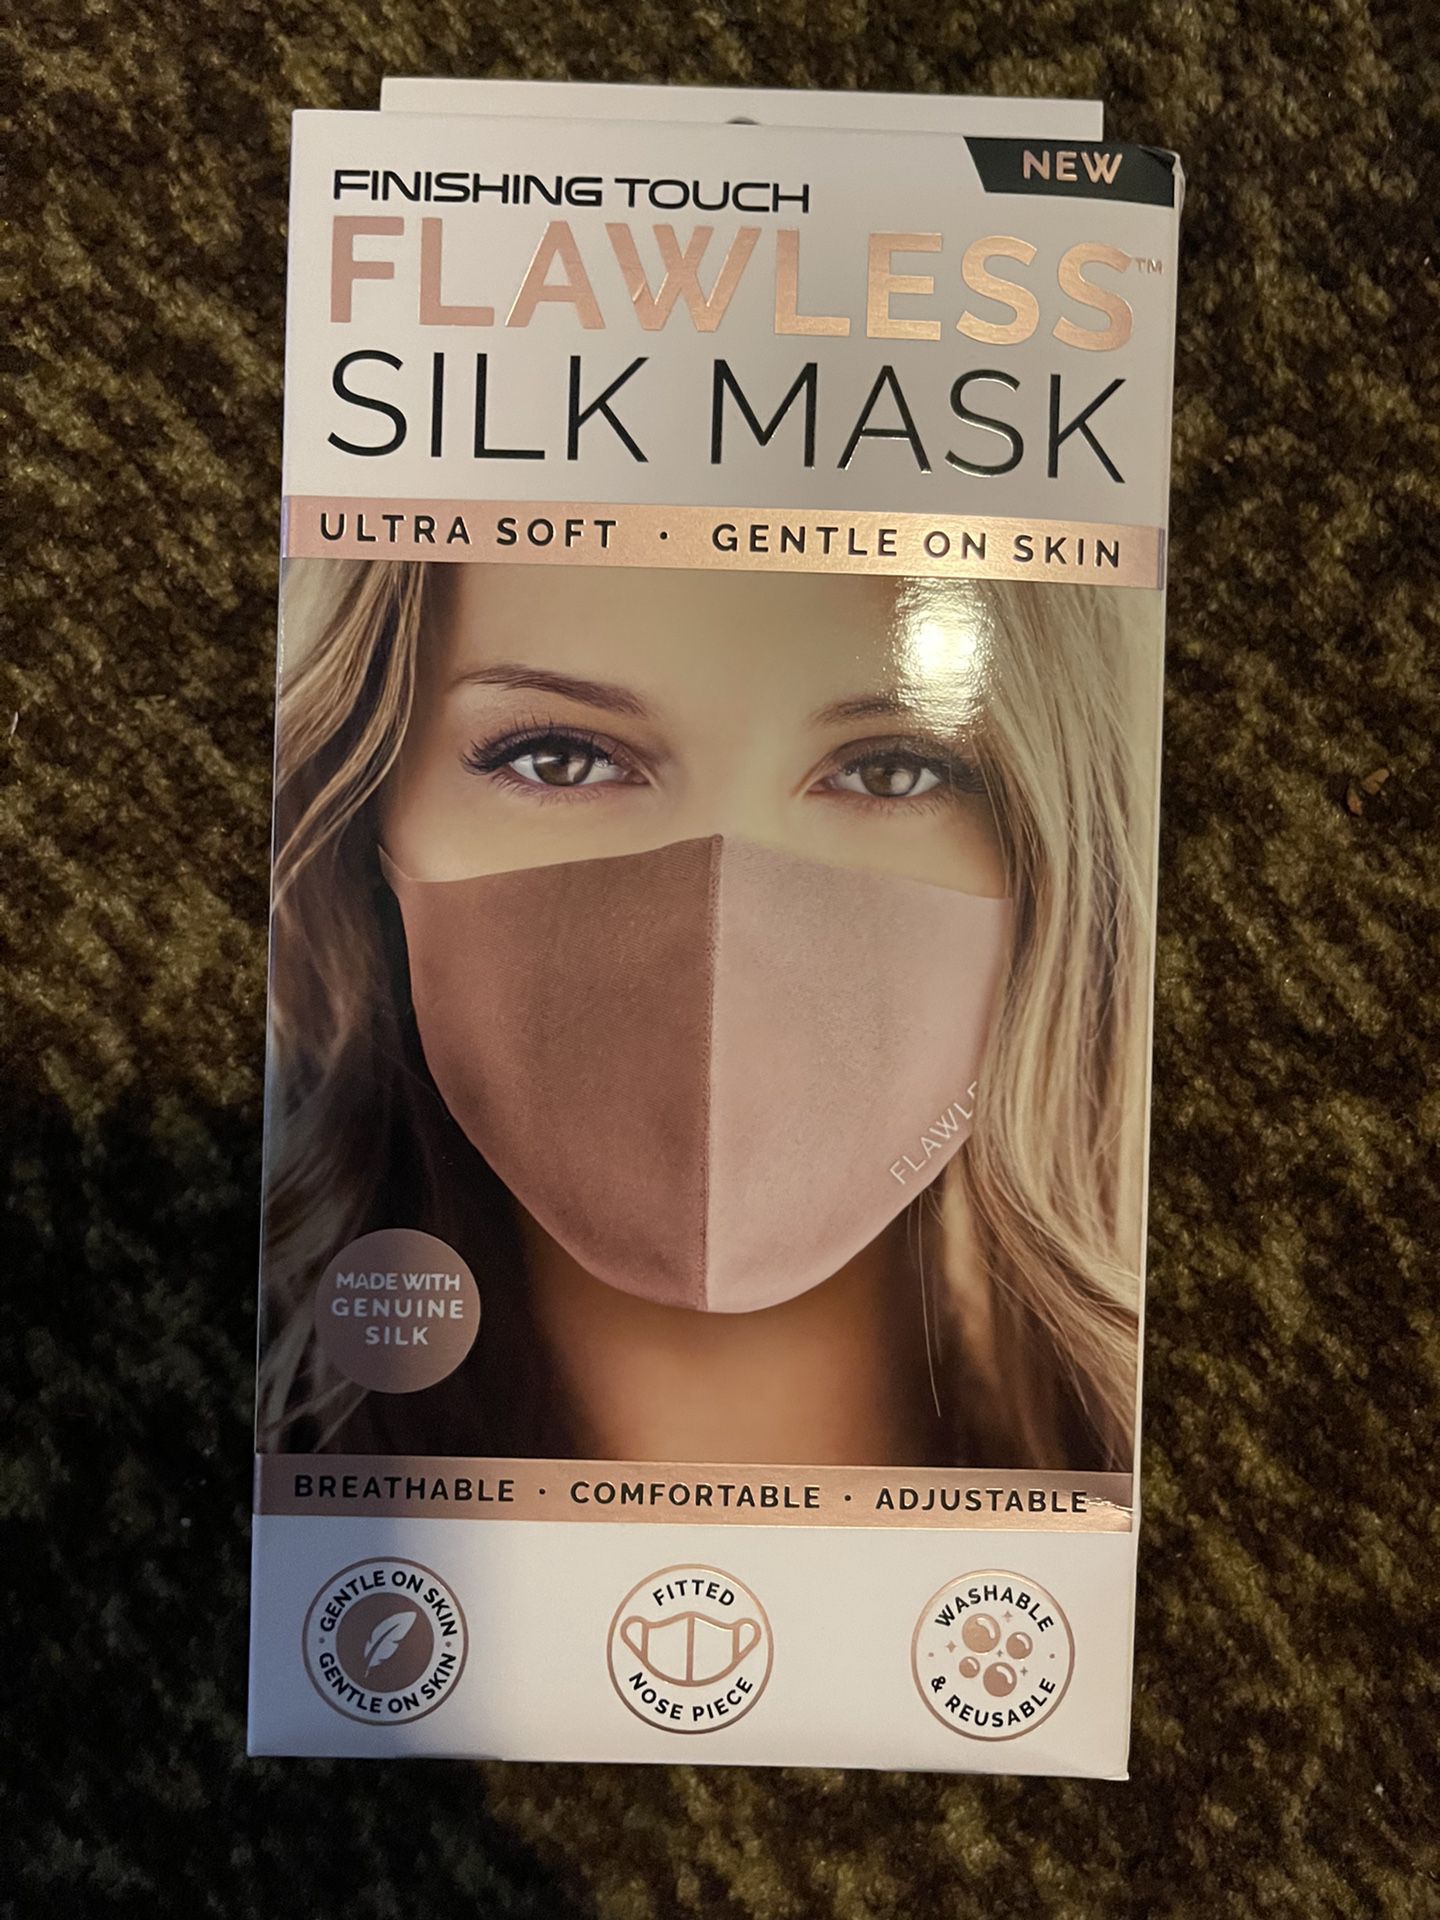 Flawless silk mask